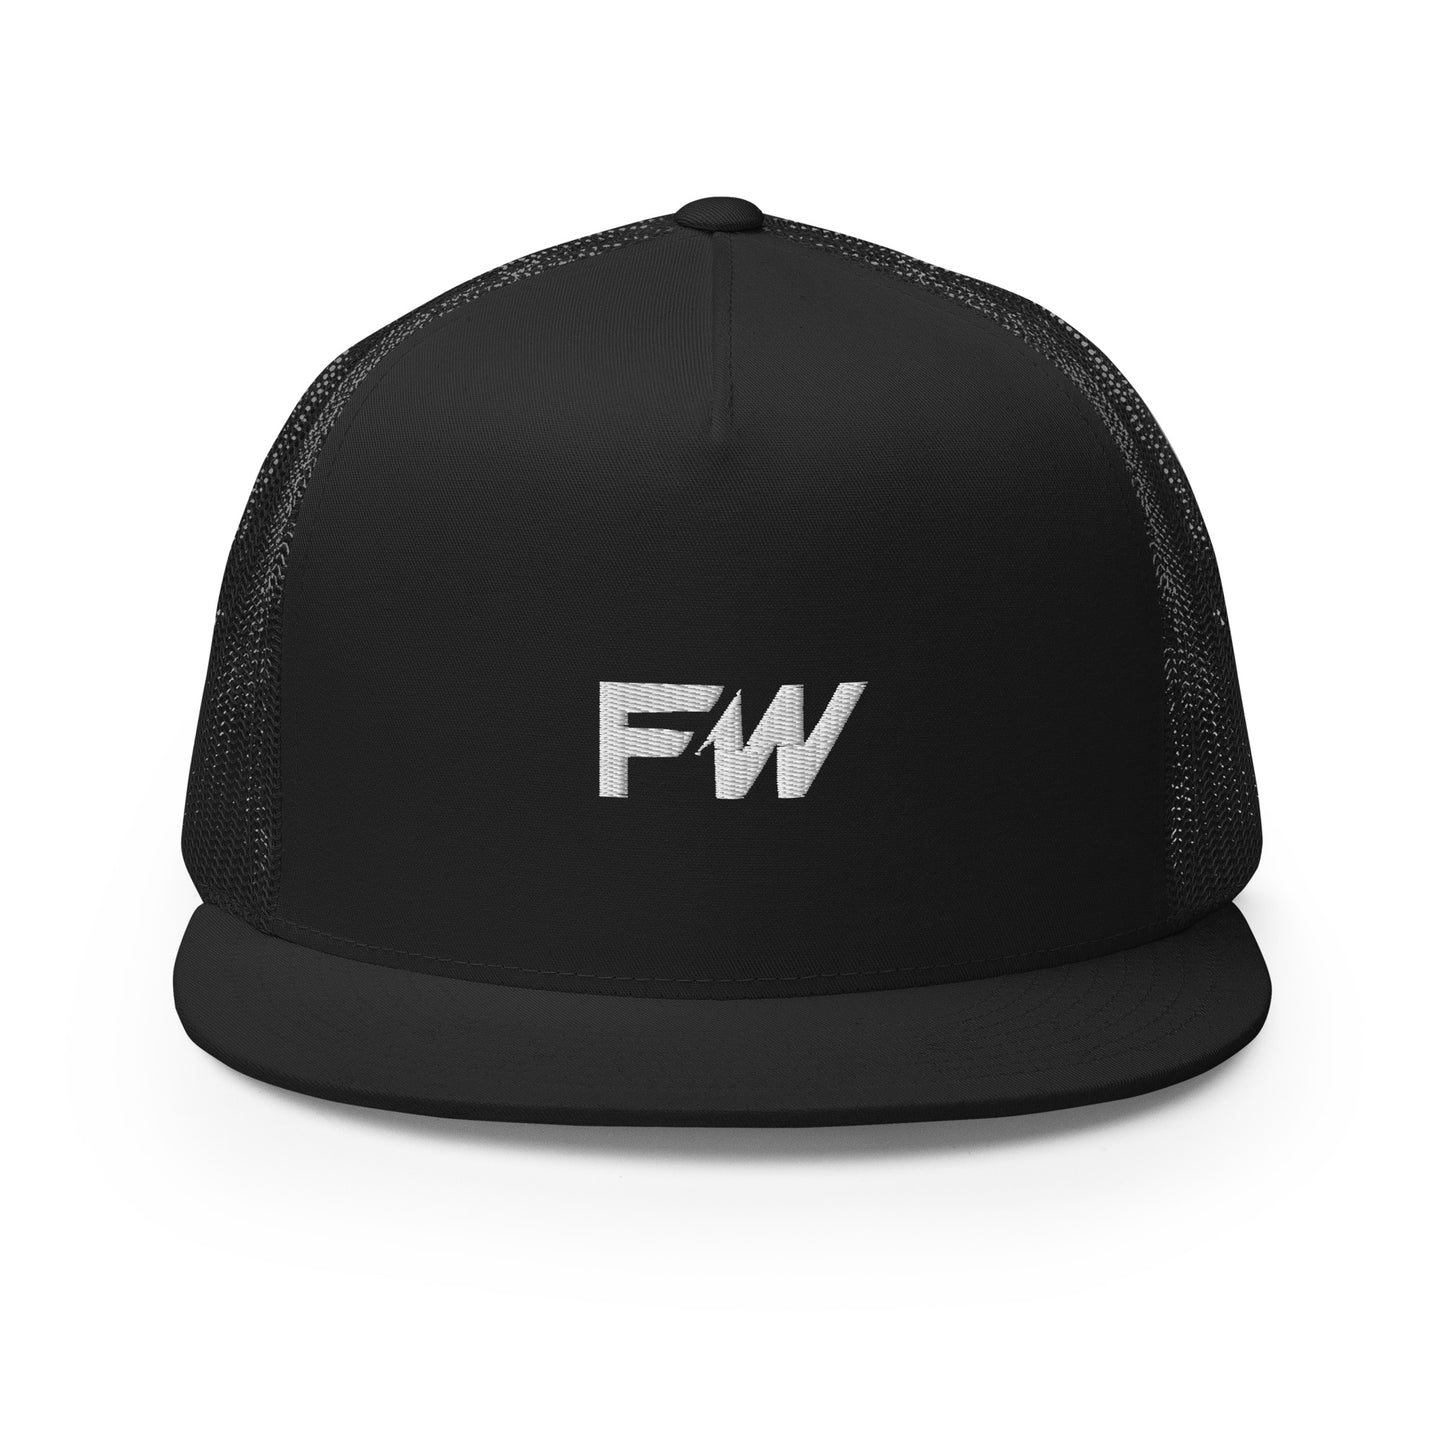 Friend Weiler "FW" Trucker Cap